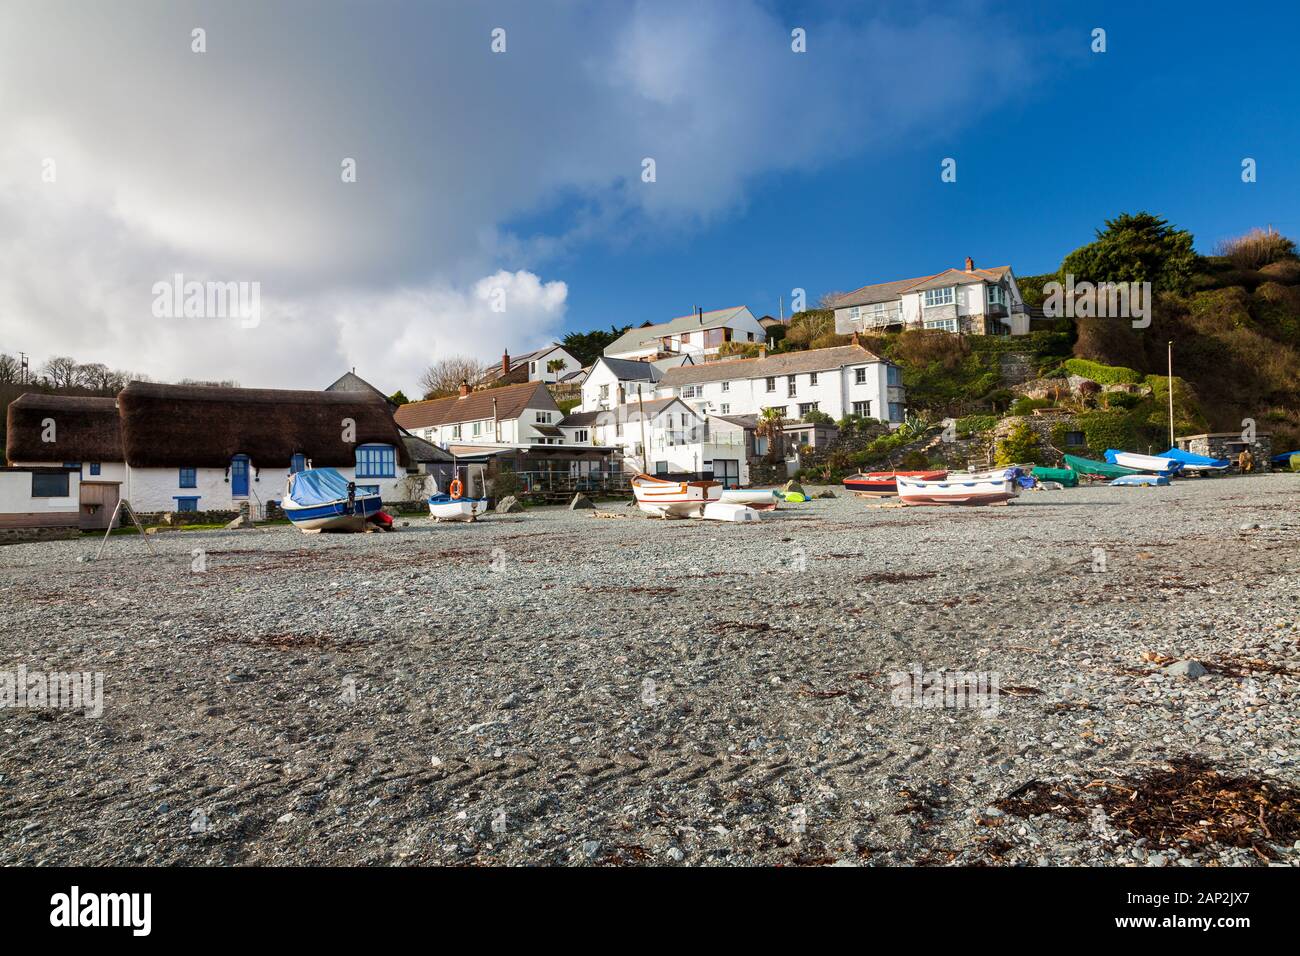 The shingle beach at Porthallow on the Lizard Peninsula Cornwall England UK Europe Stock Photo